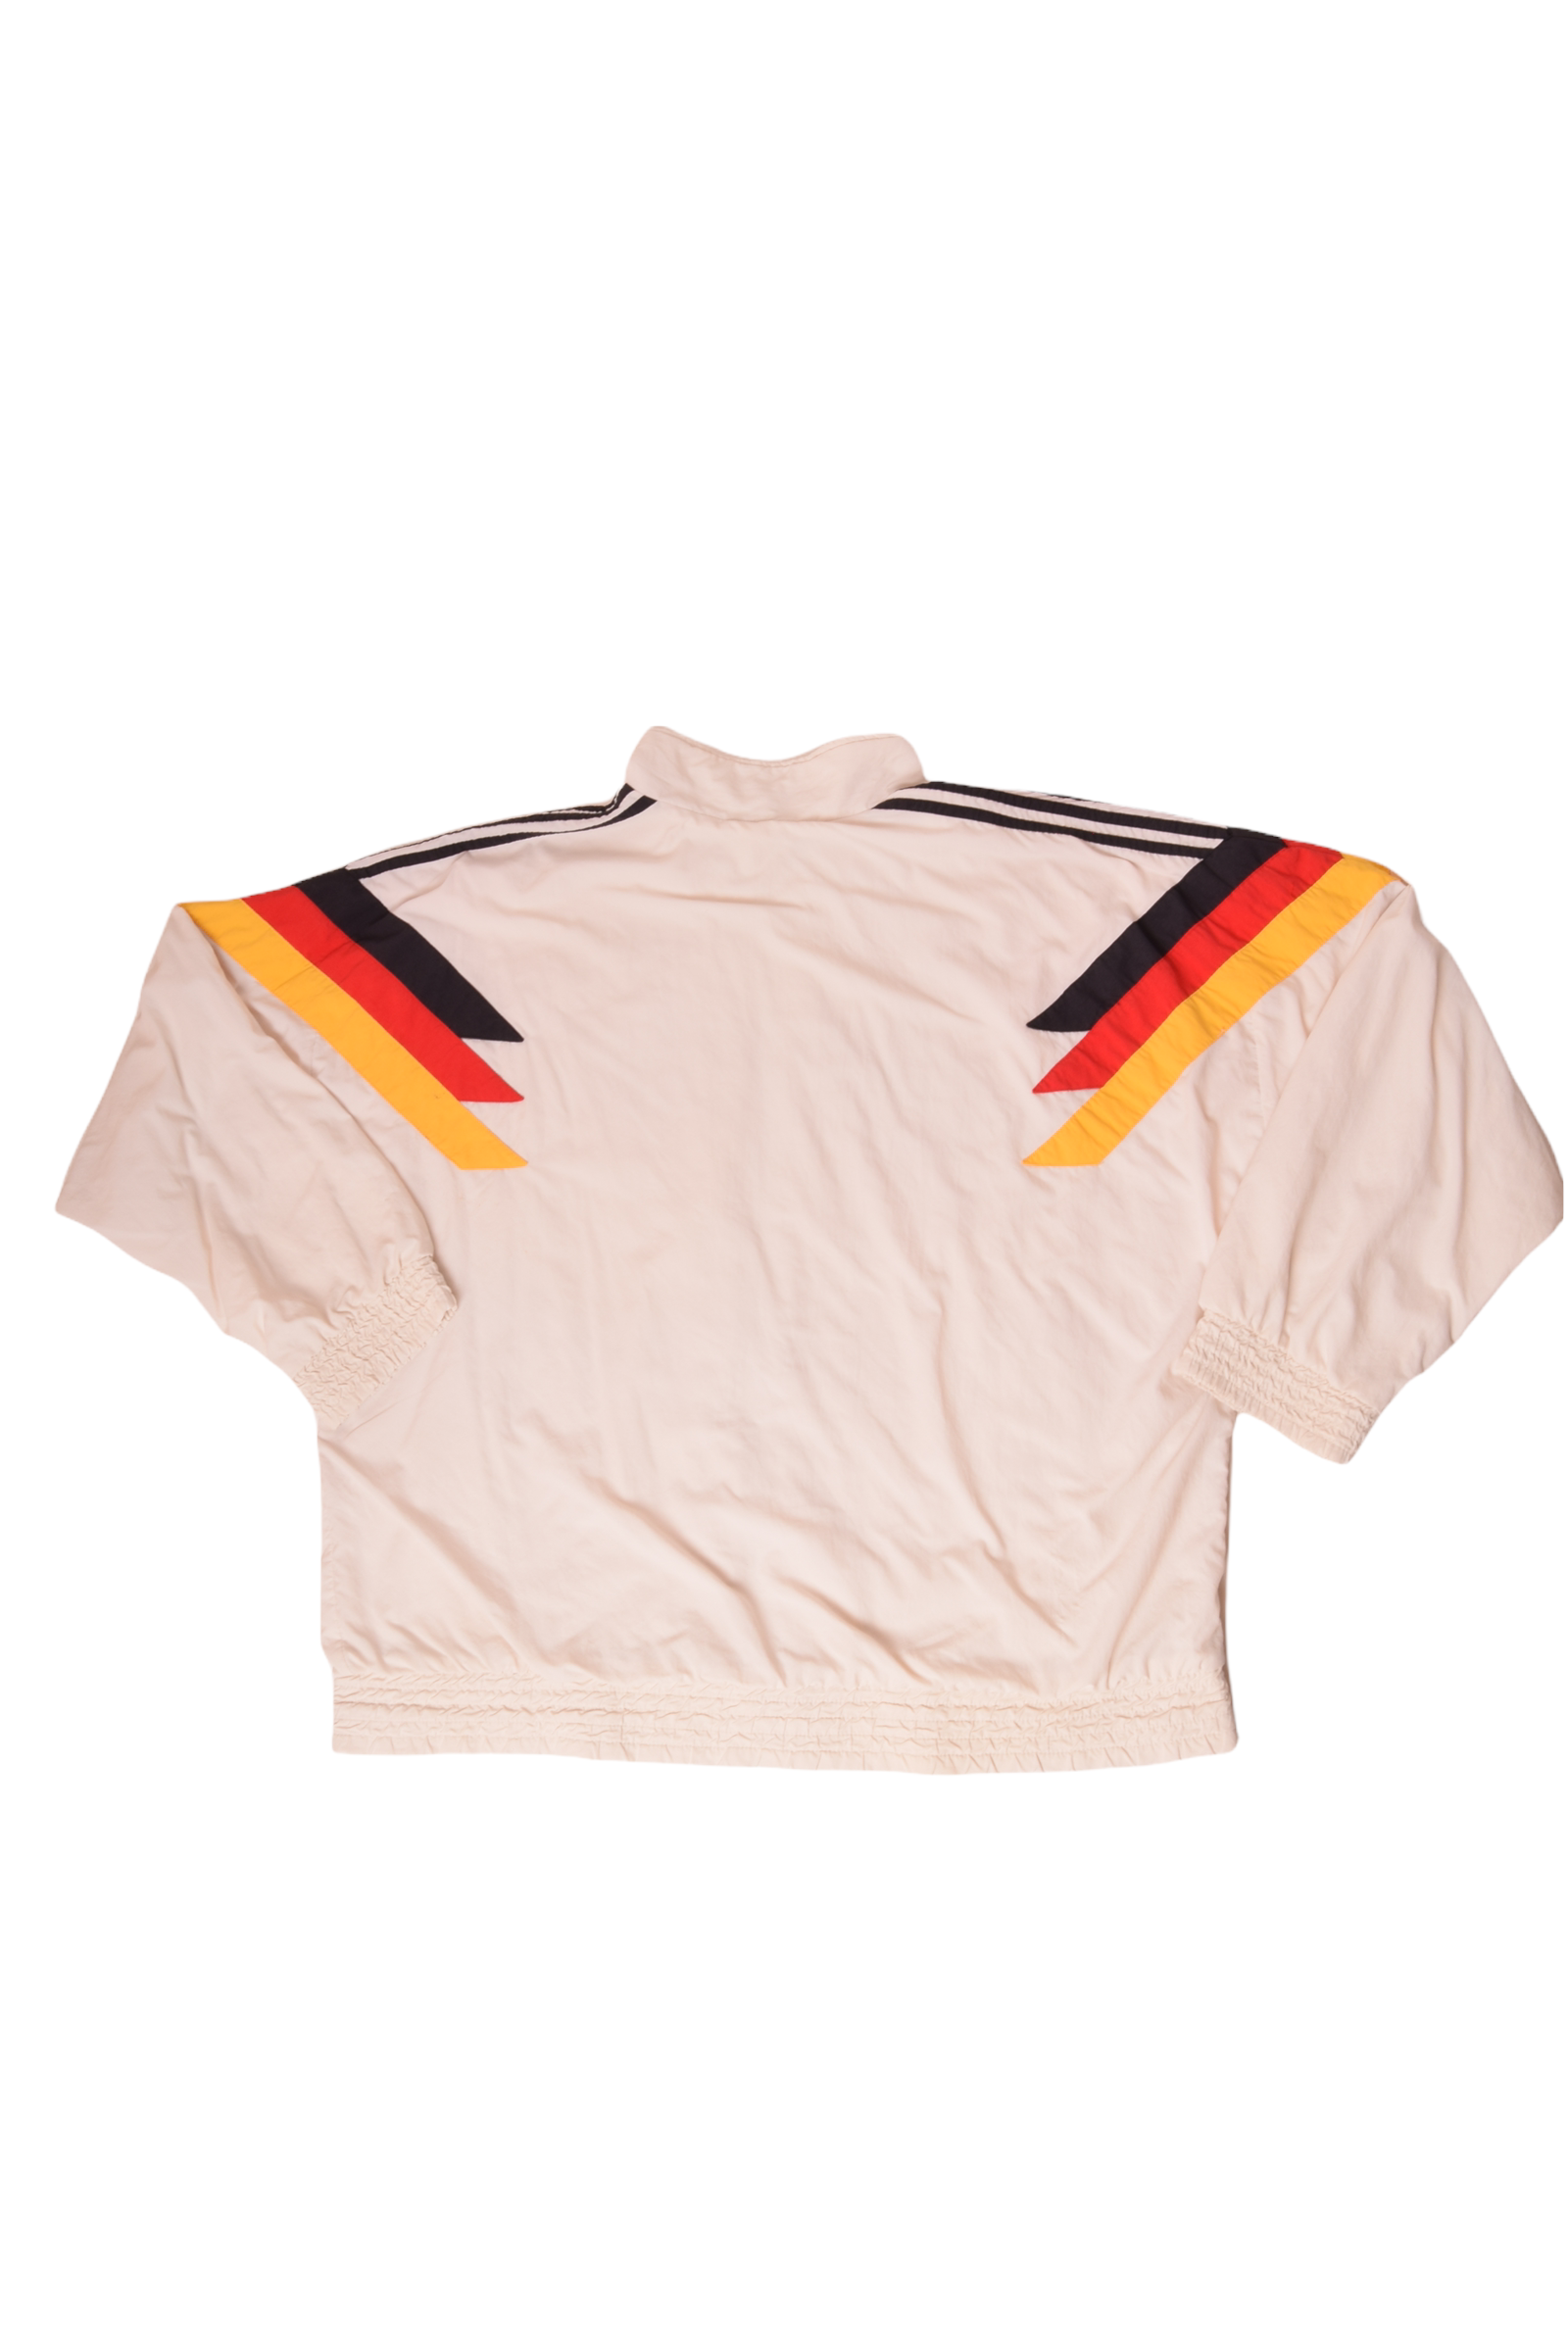 Vintage Germany Adidas 1989-1991 Jacket Size XL-XXL White Yellow Red Black